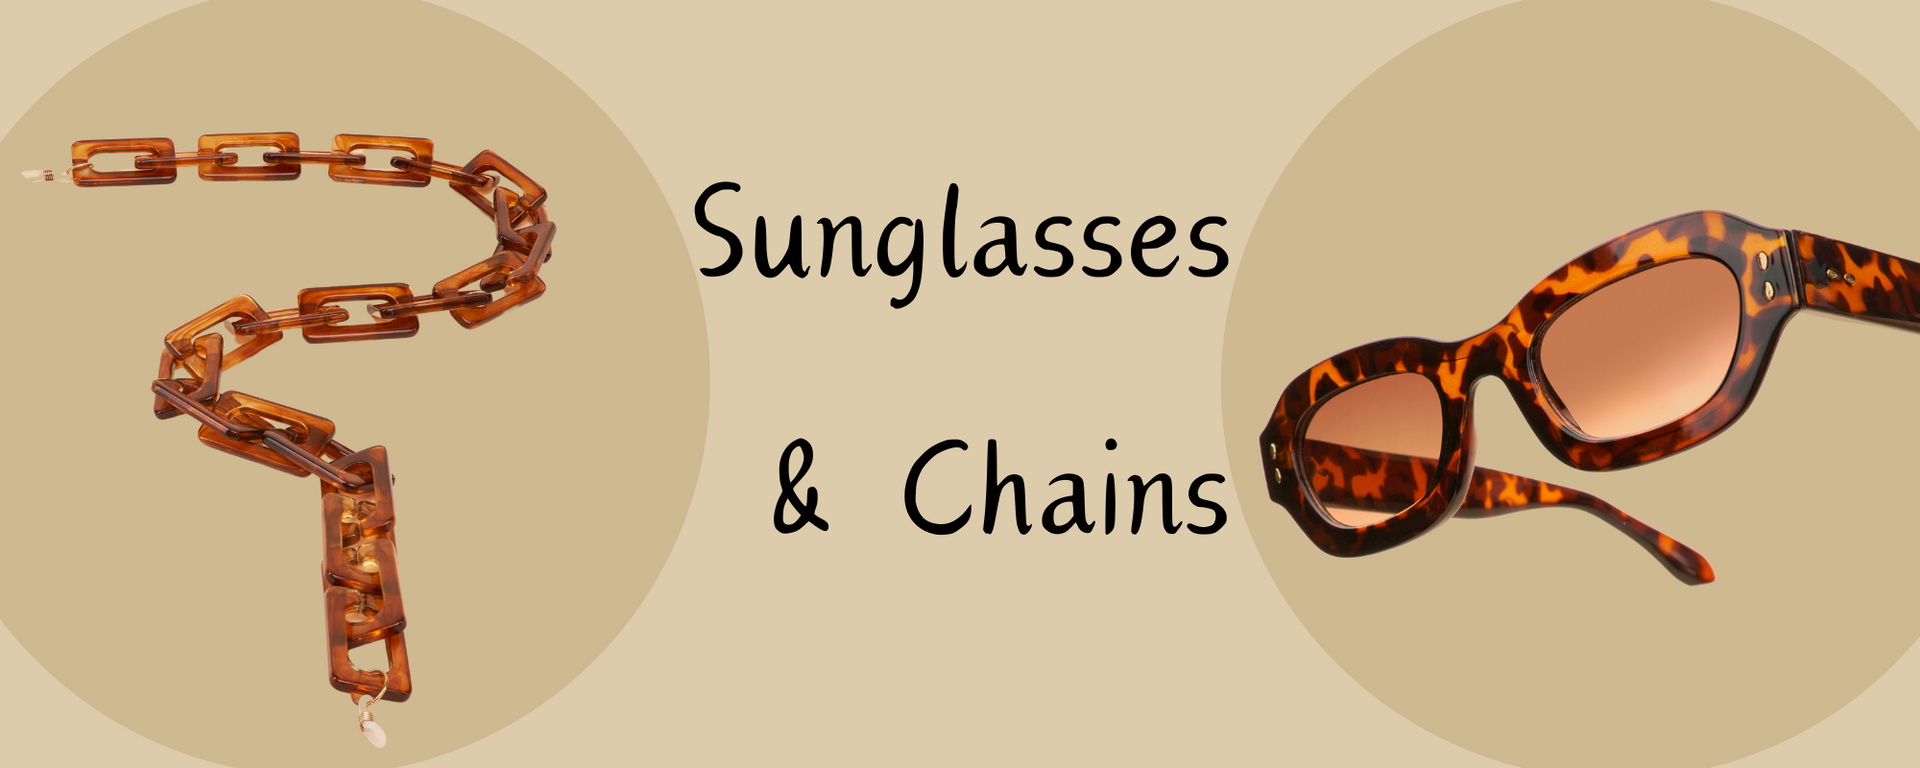 Sunglasses & Chains